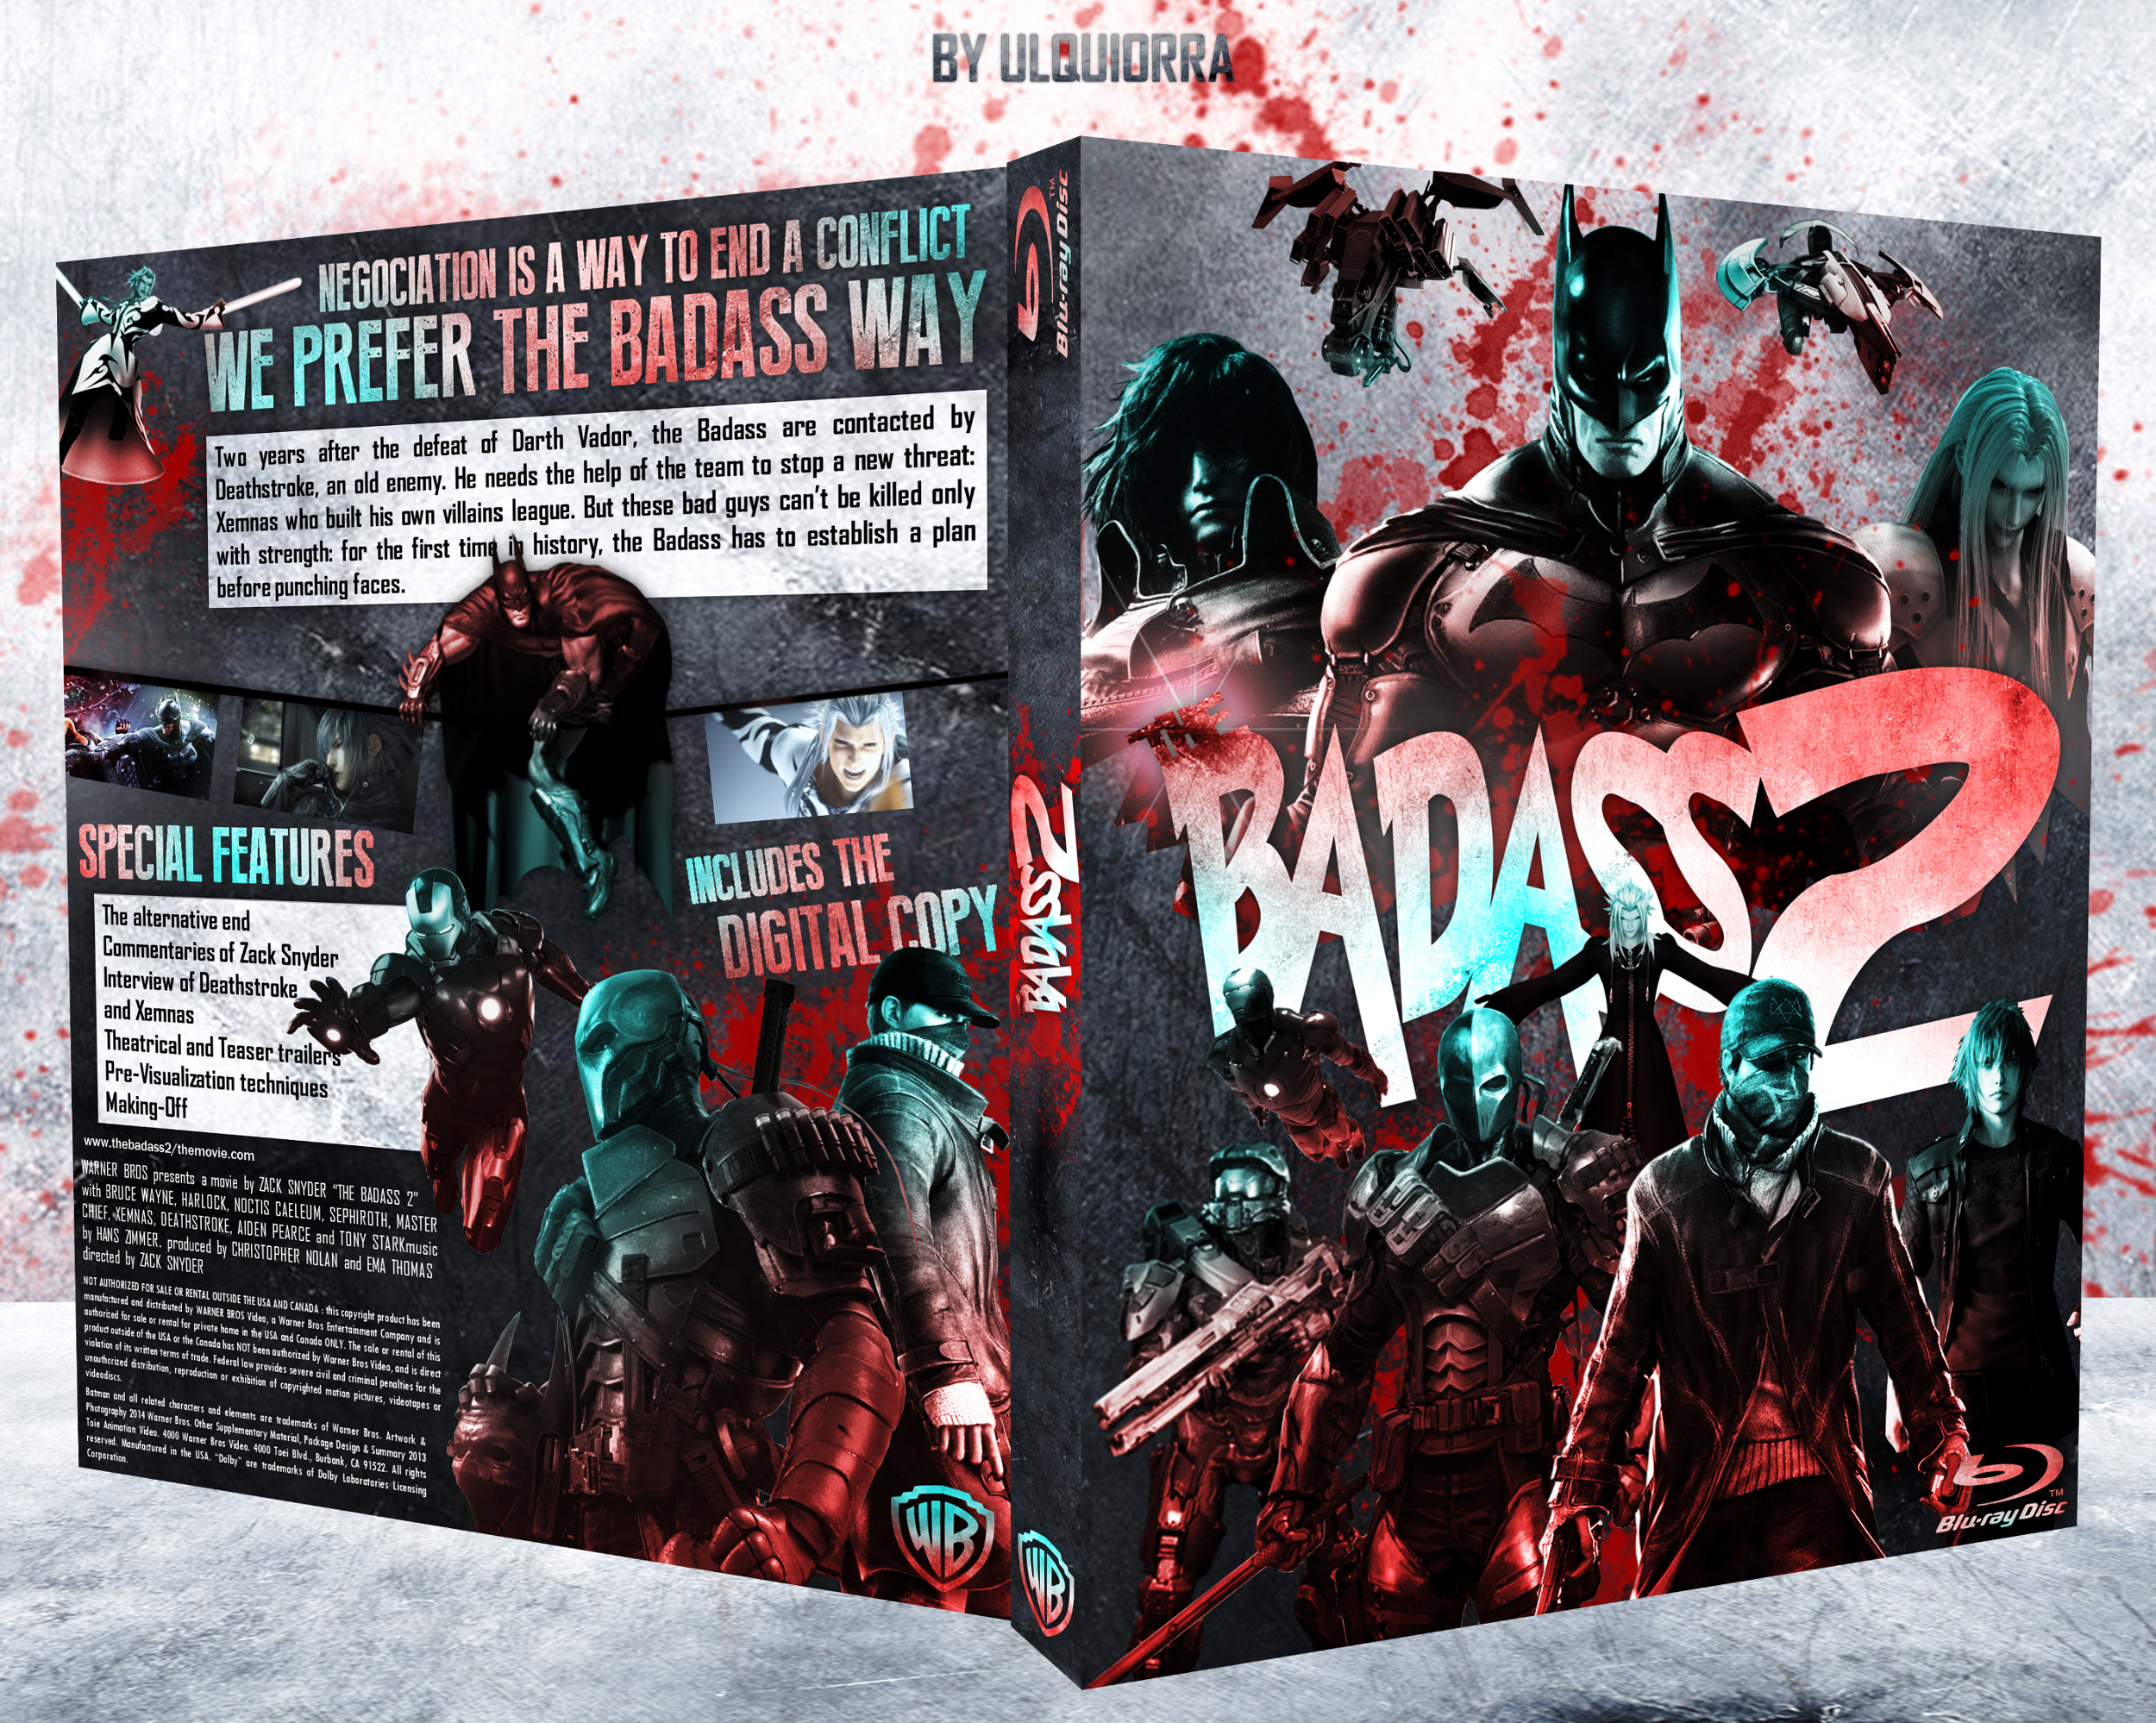 The Badass 2 box cover